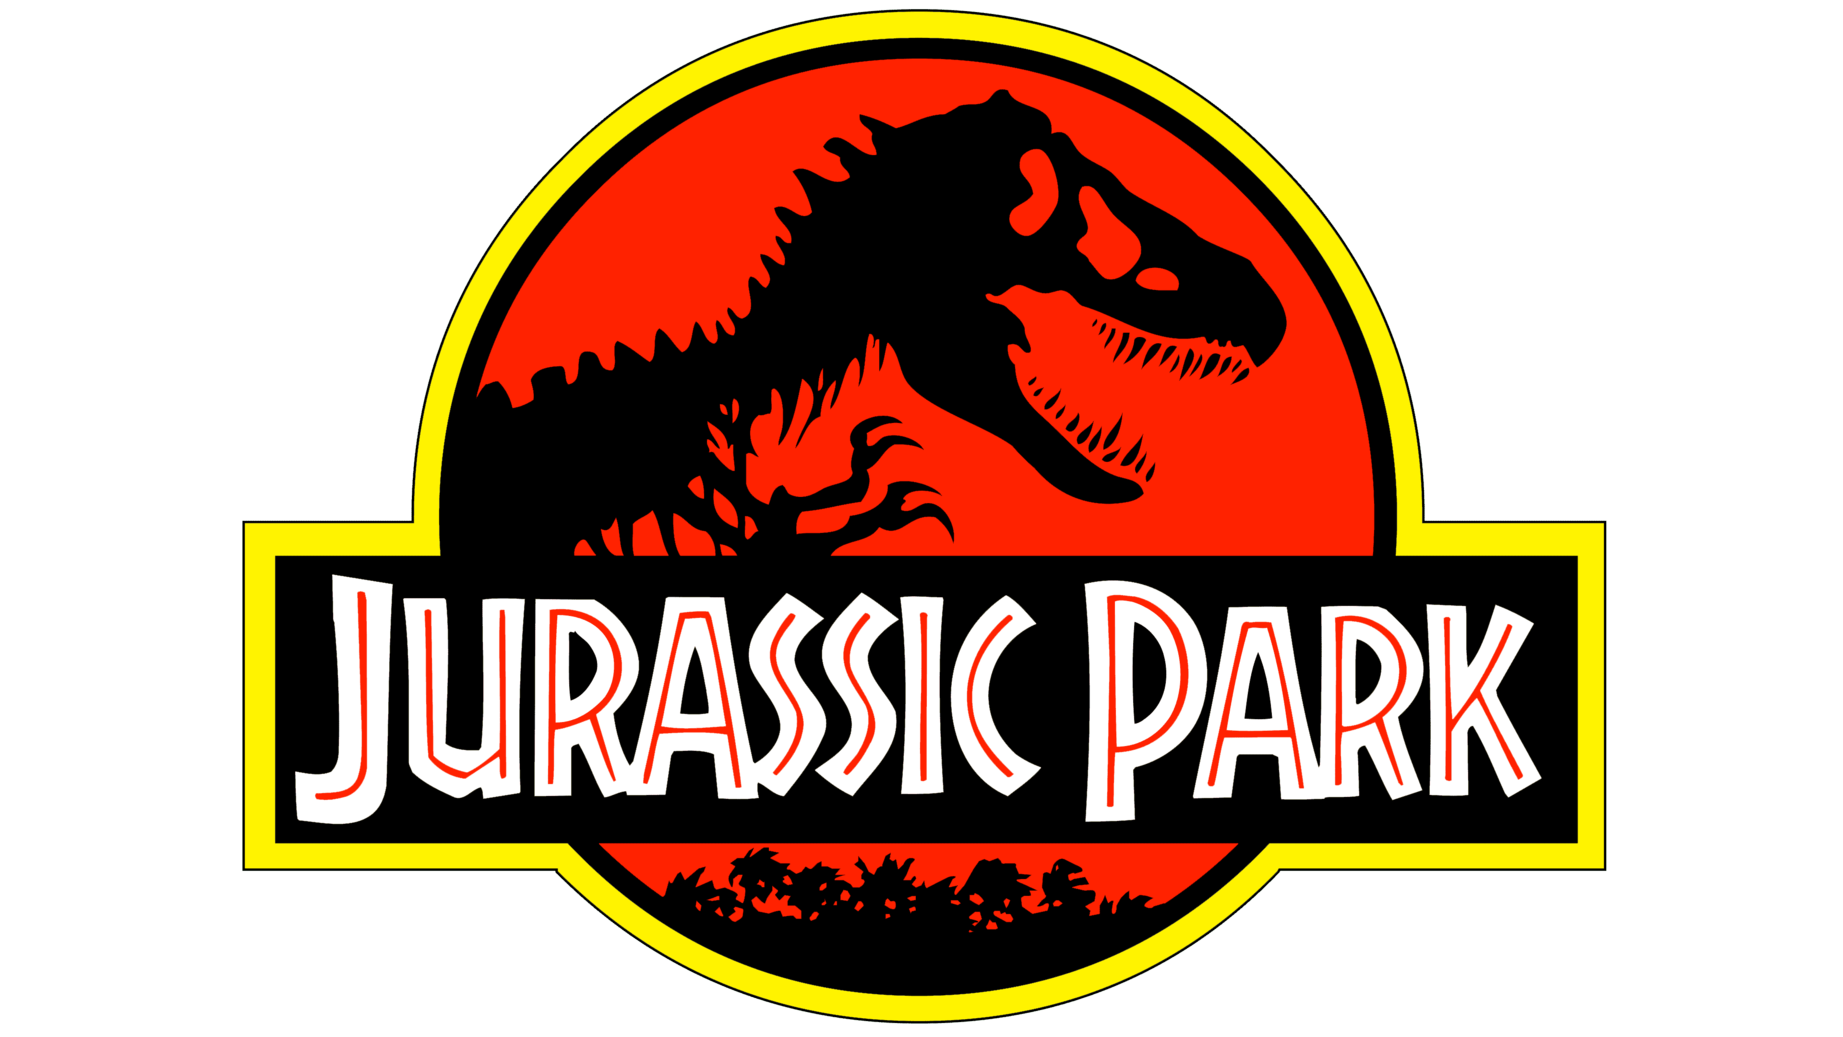 Jurassic park sign